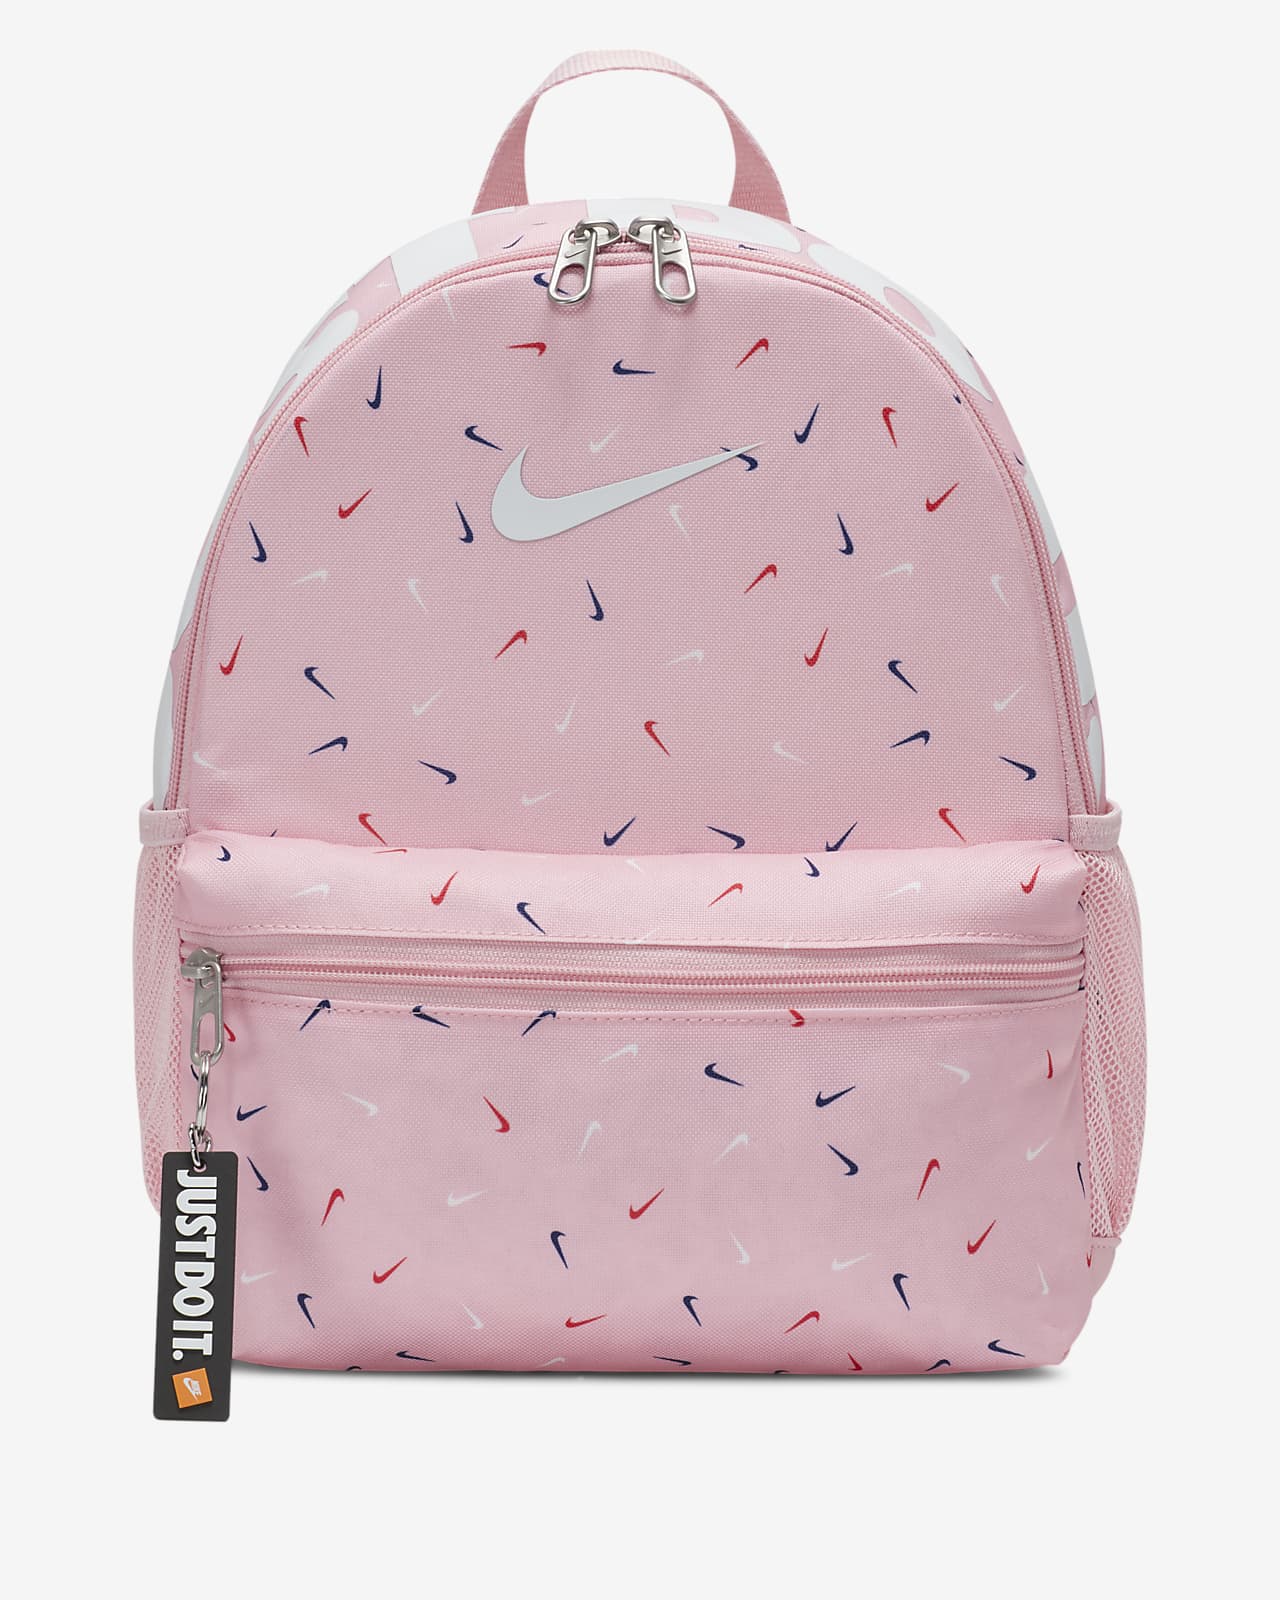 Heart Kawaii ITA Japanese Bag Anime Sticker & kawaii wallet purse cute  backpacks for teen girls trendy stuff gift ideas book bags tote anime  backpack kawaii accessories cheap Laptop Handbag Pink -